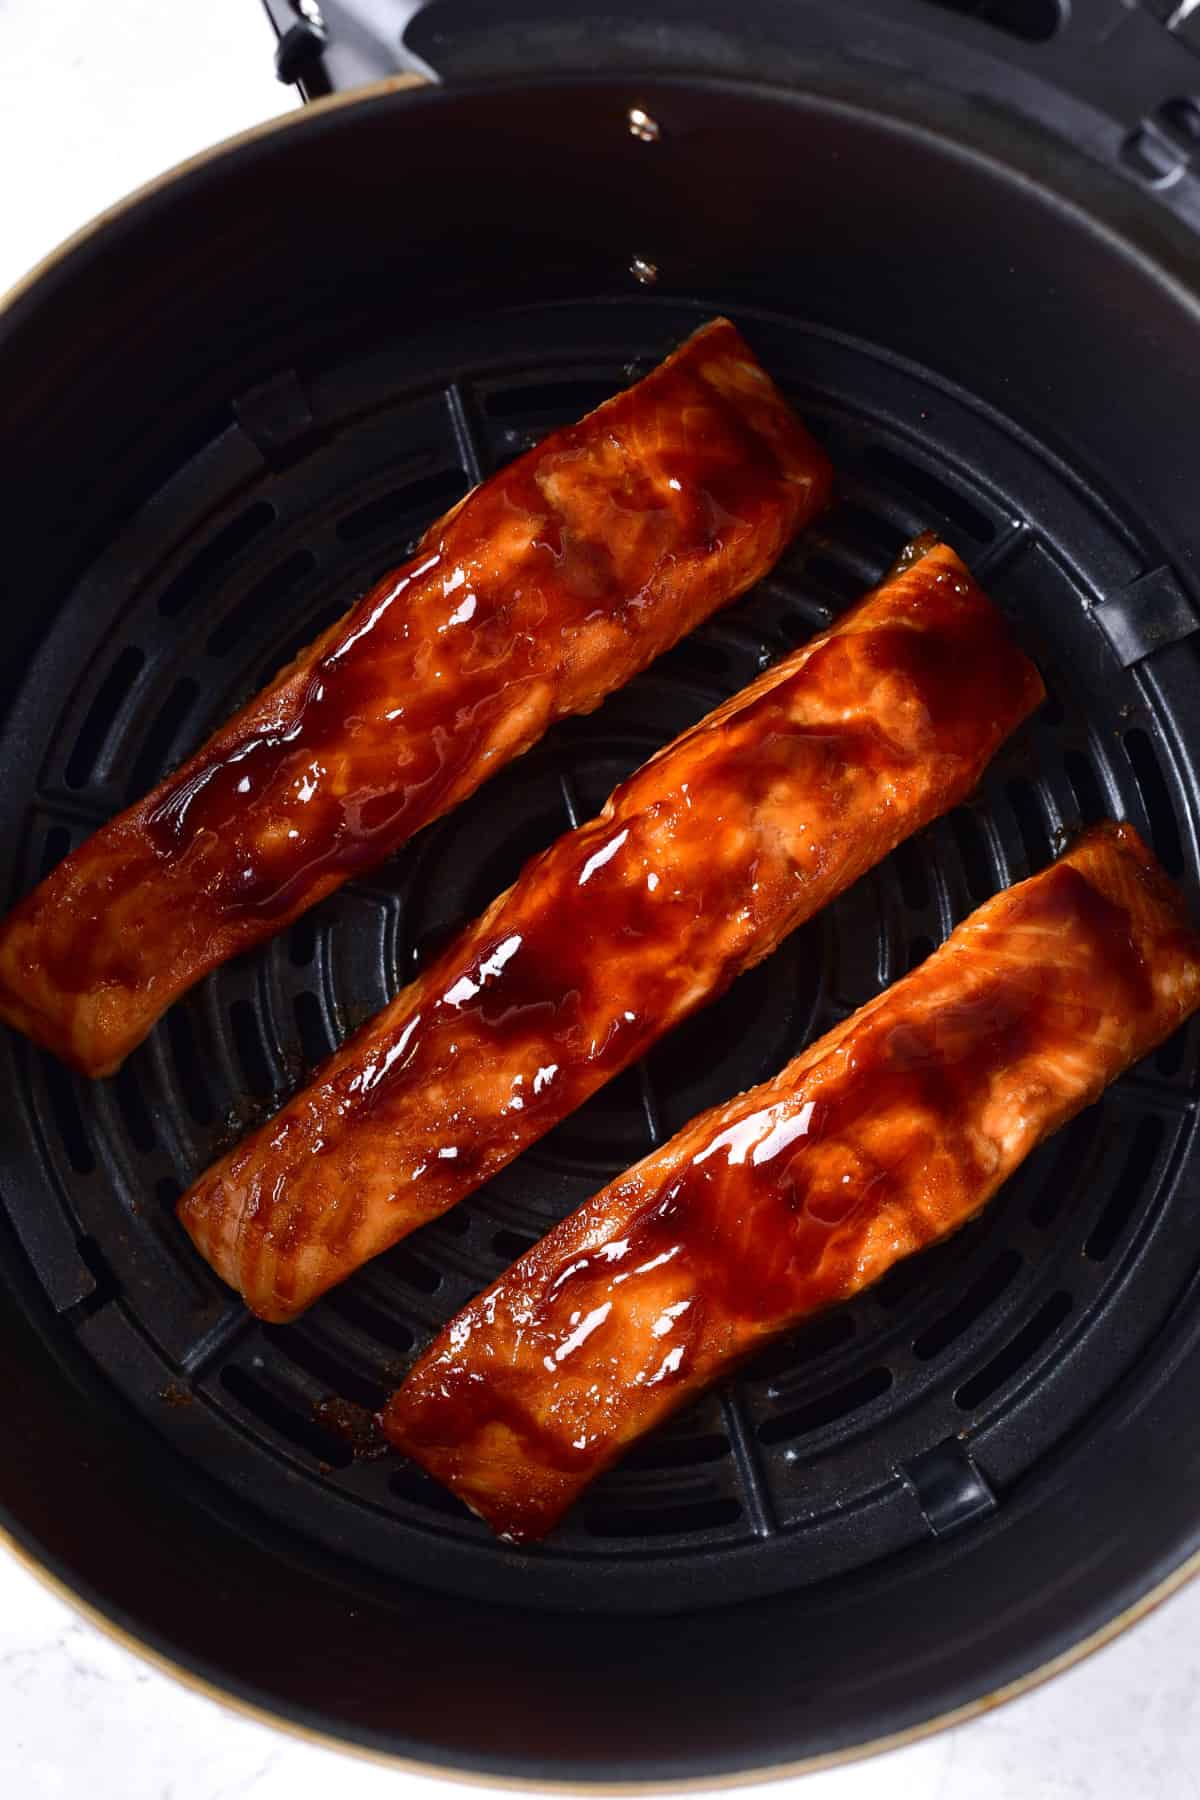 teriyaki glazed salmon steaks cooking in an air fryer.